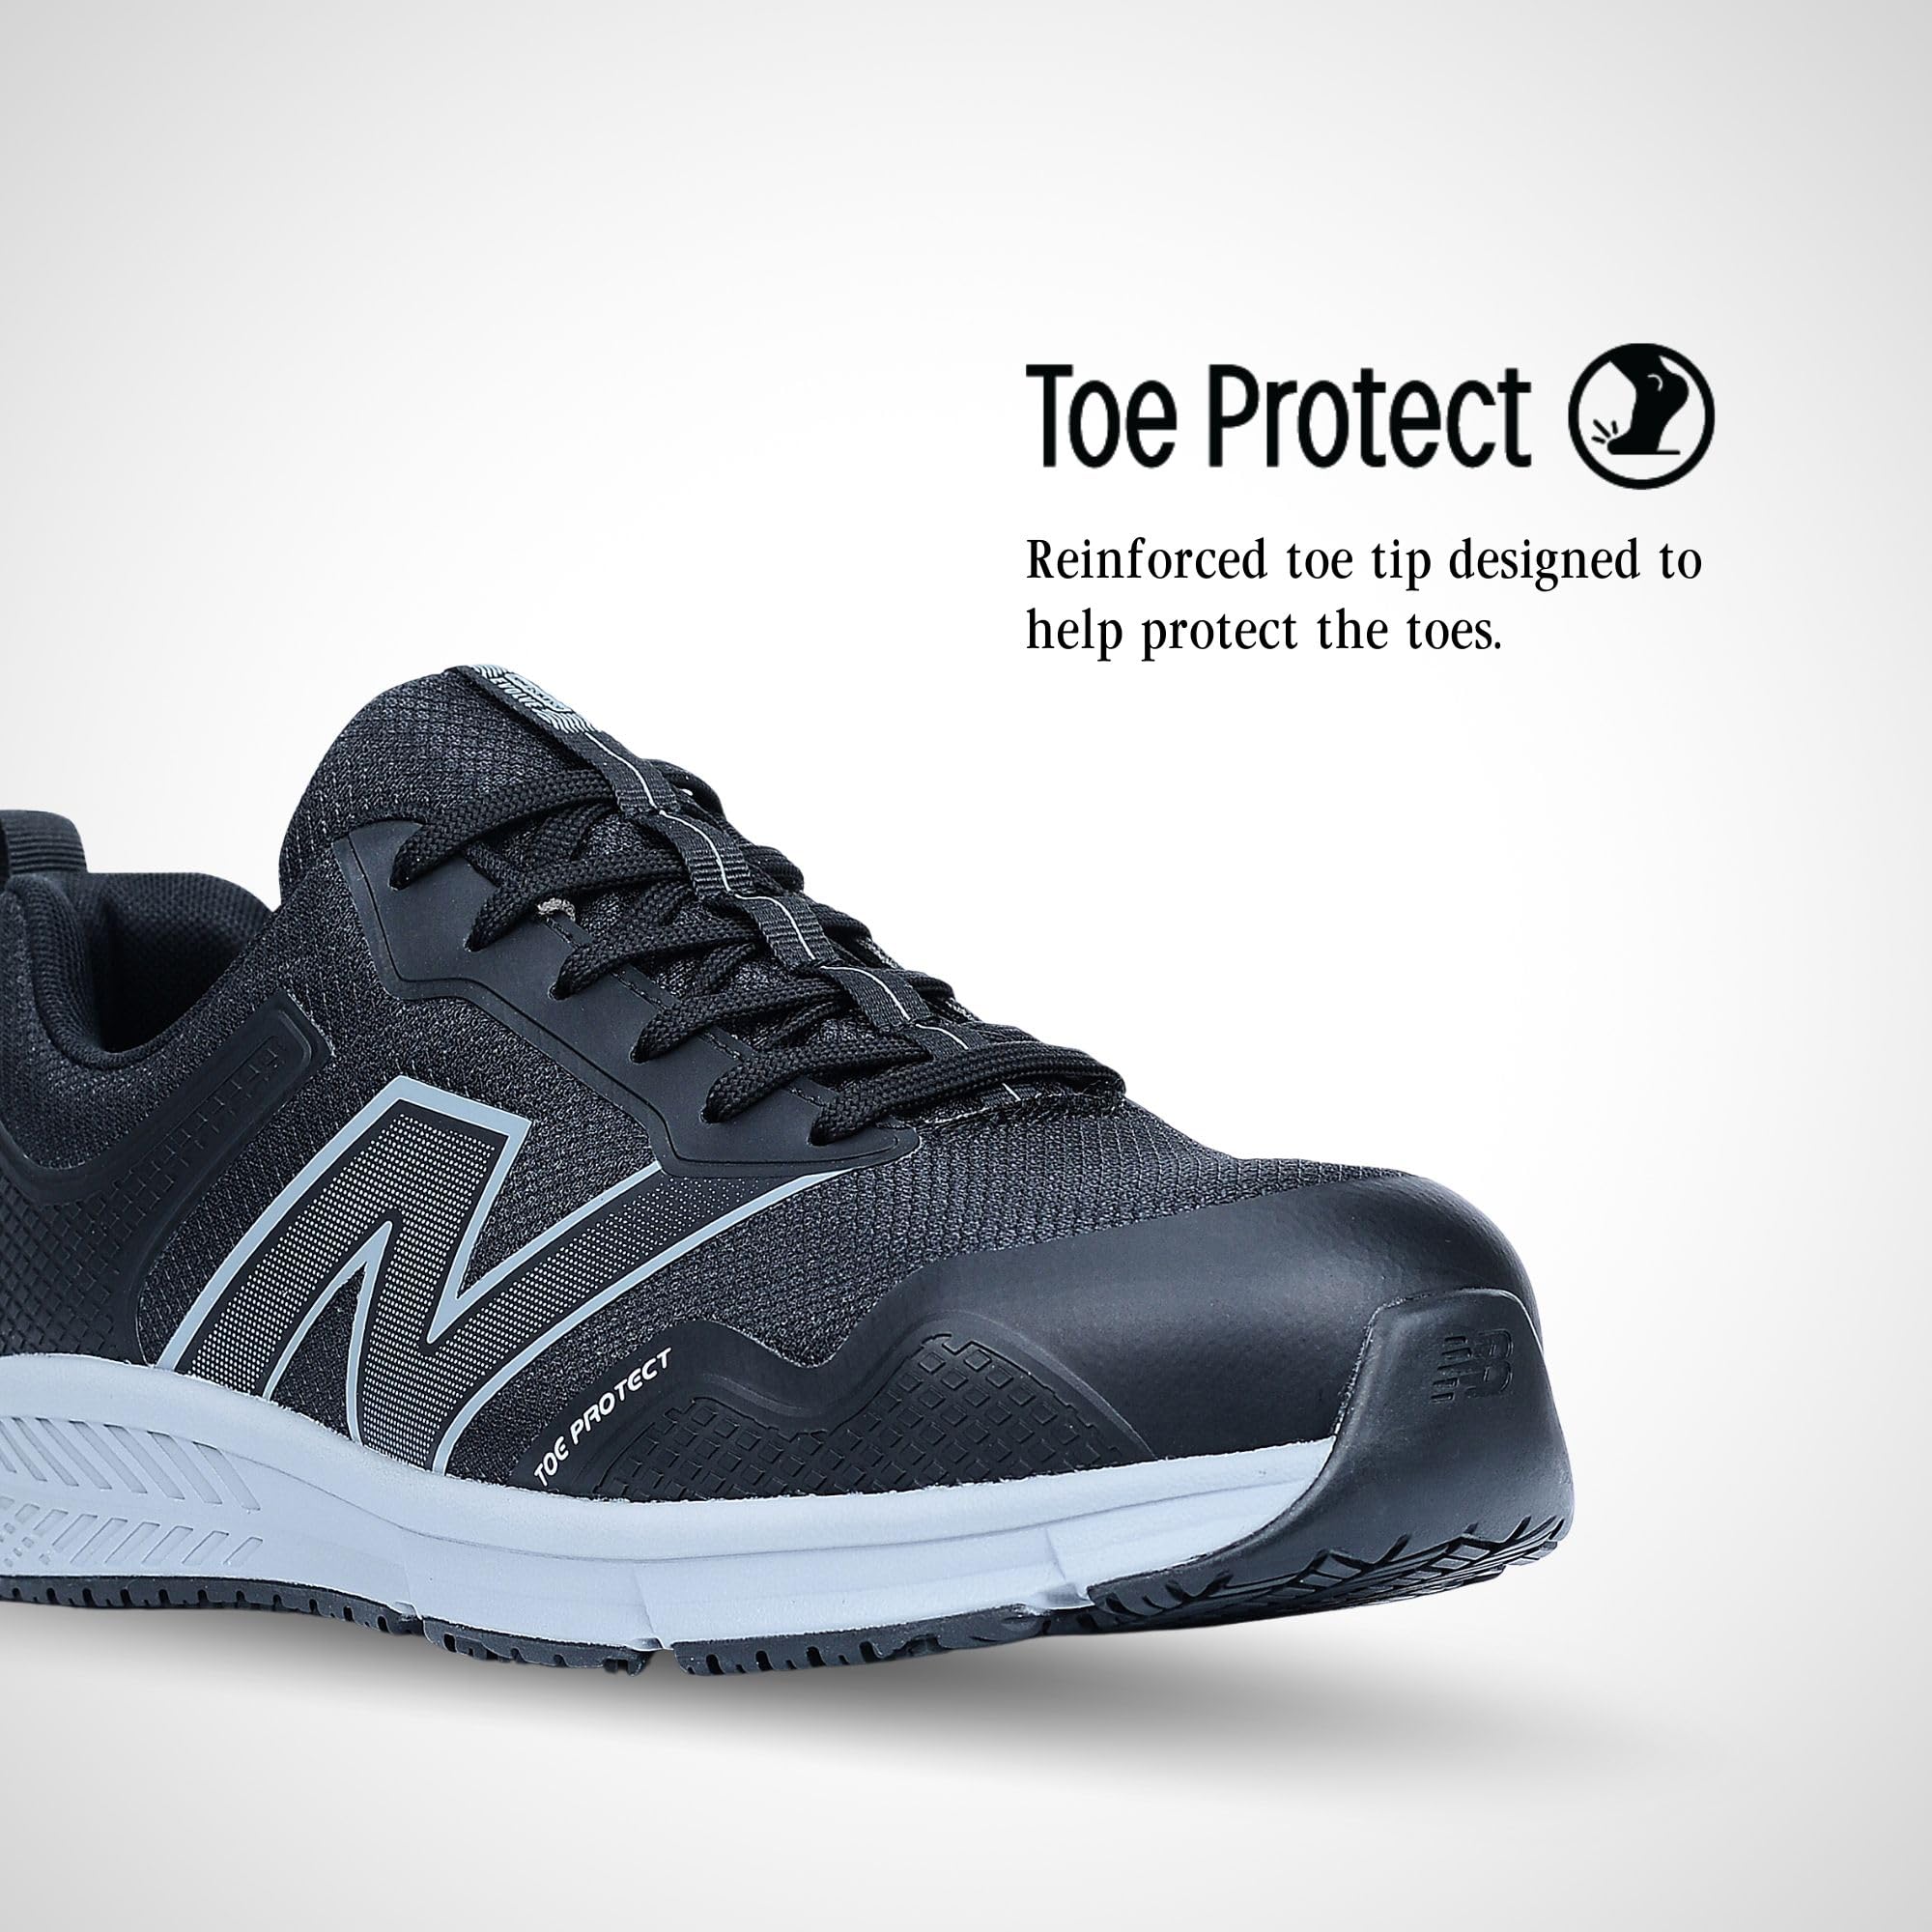 New Balance Men's Aluminum Toe Evolve Industrial Shoe, Black/Grey, 11